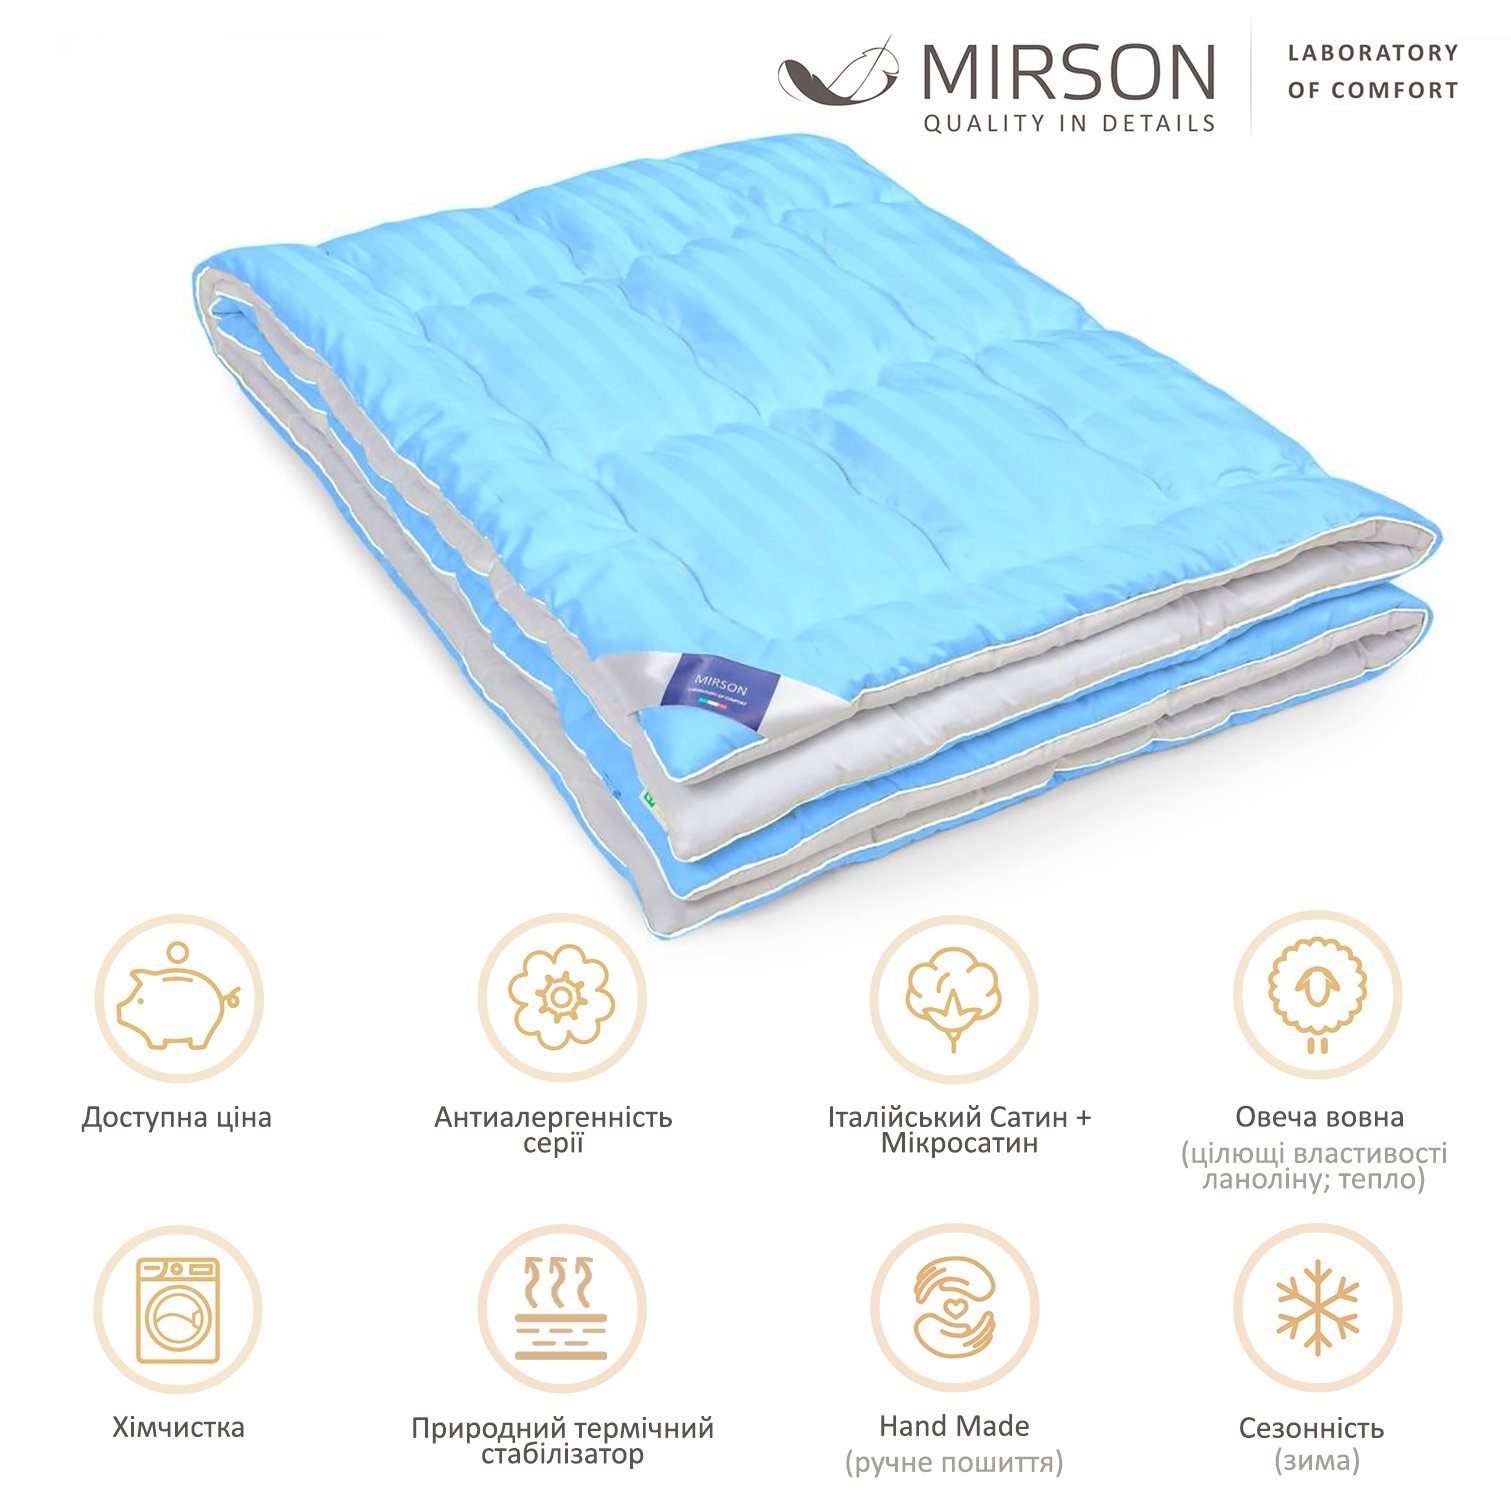 Одеяло шерстяное MirSon Valentino Hand Made №1356, зимнее, 140x205 см, бело-голубое - фото 5